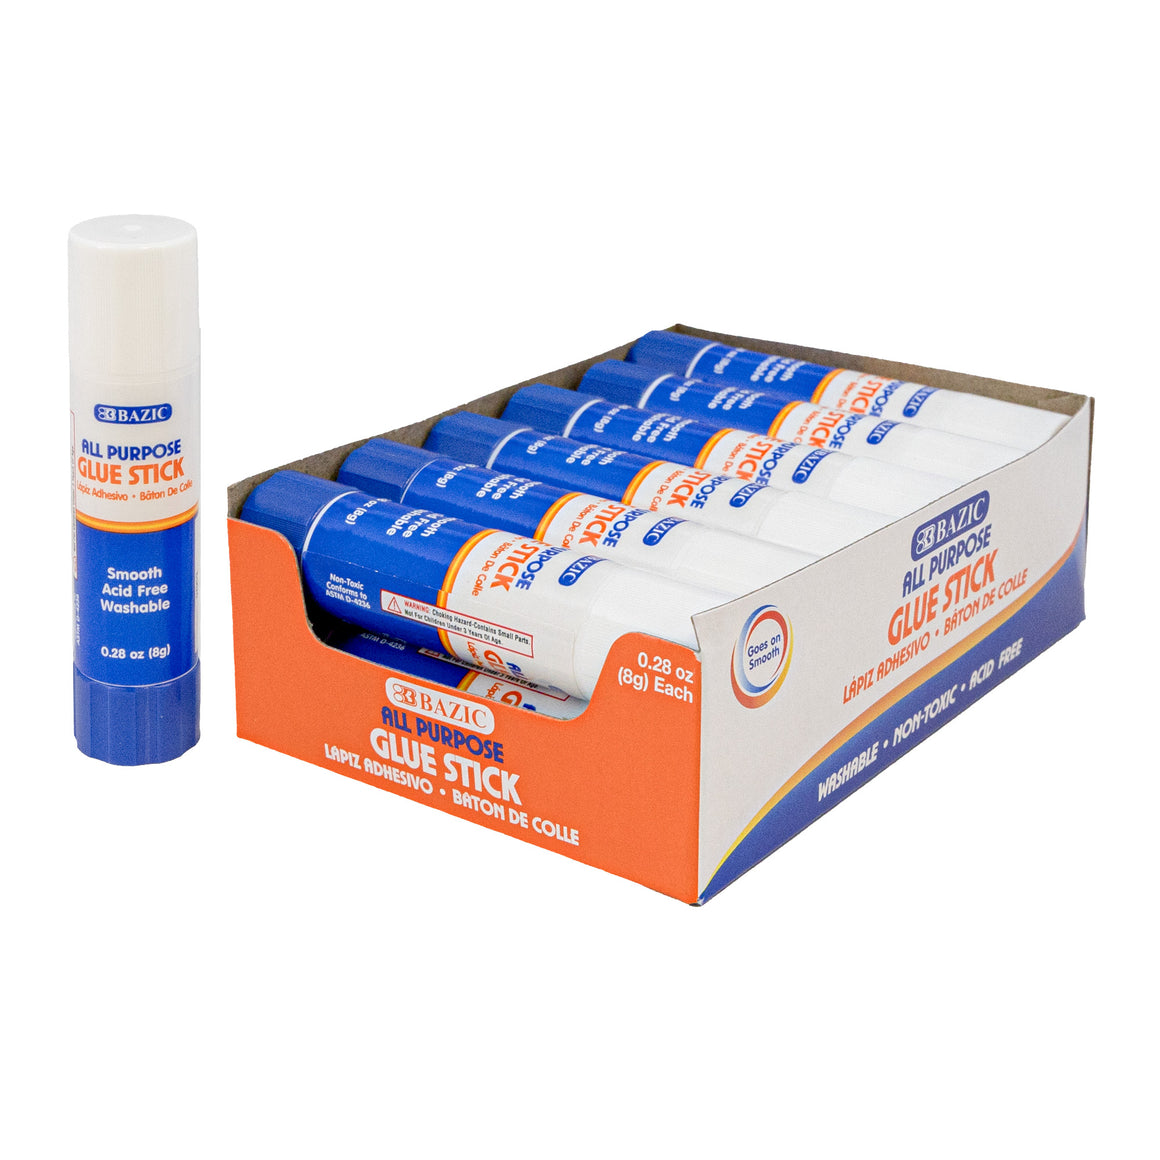 Glue Stick Premium Pack 0.28 oz (8g)